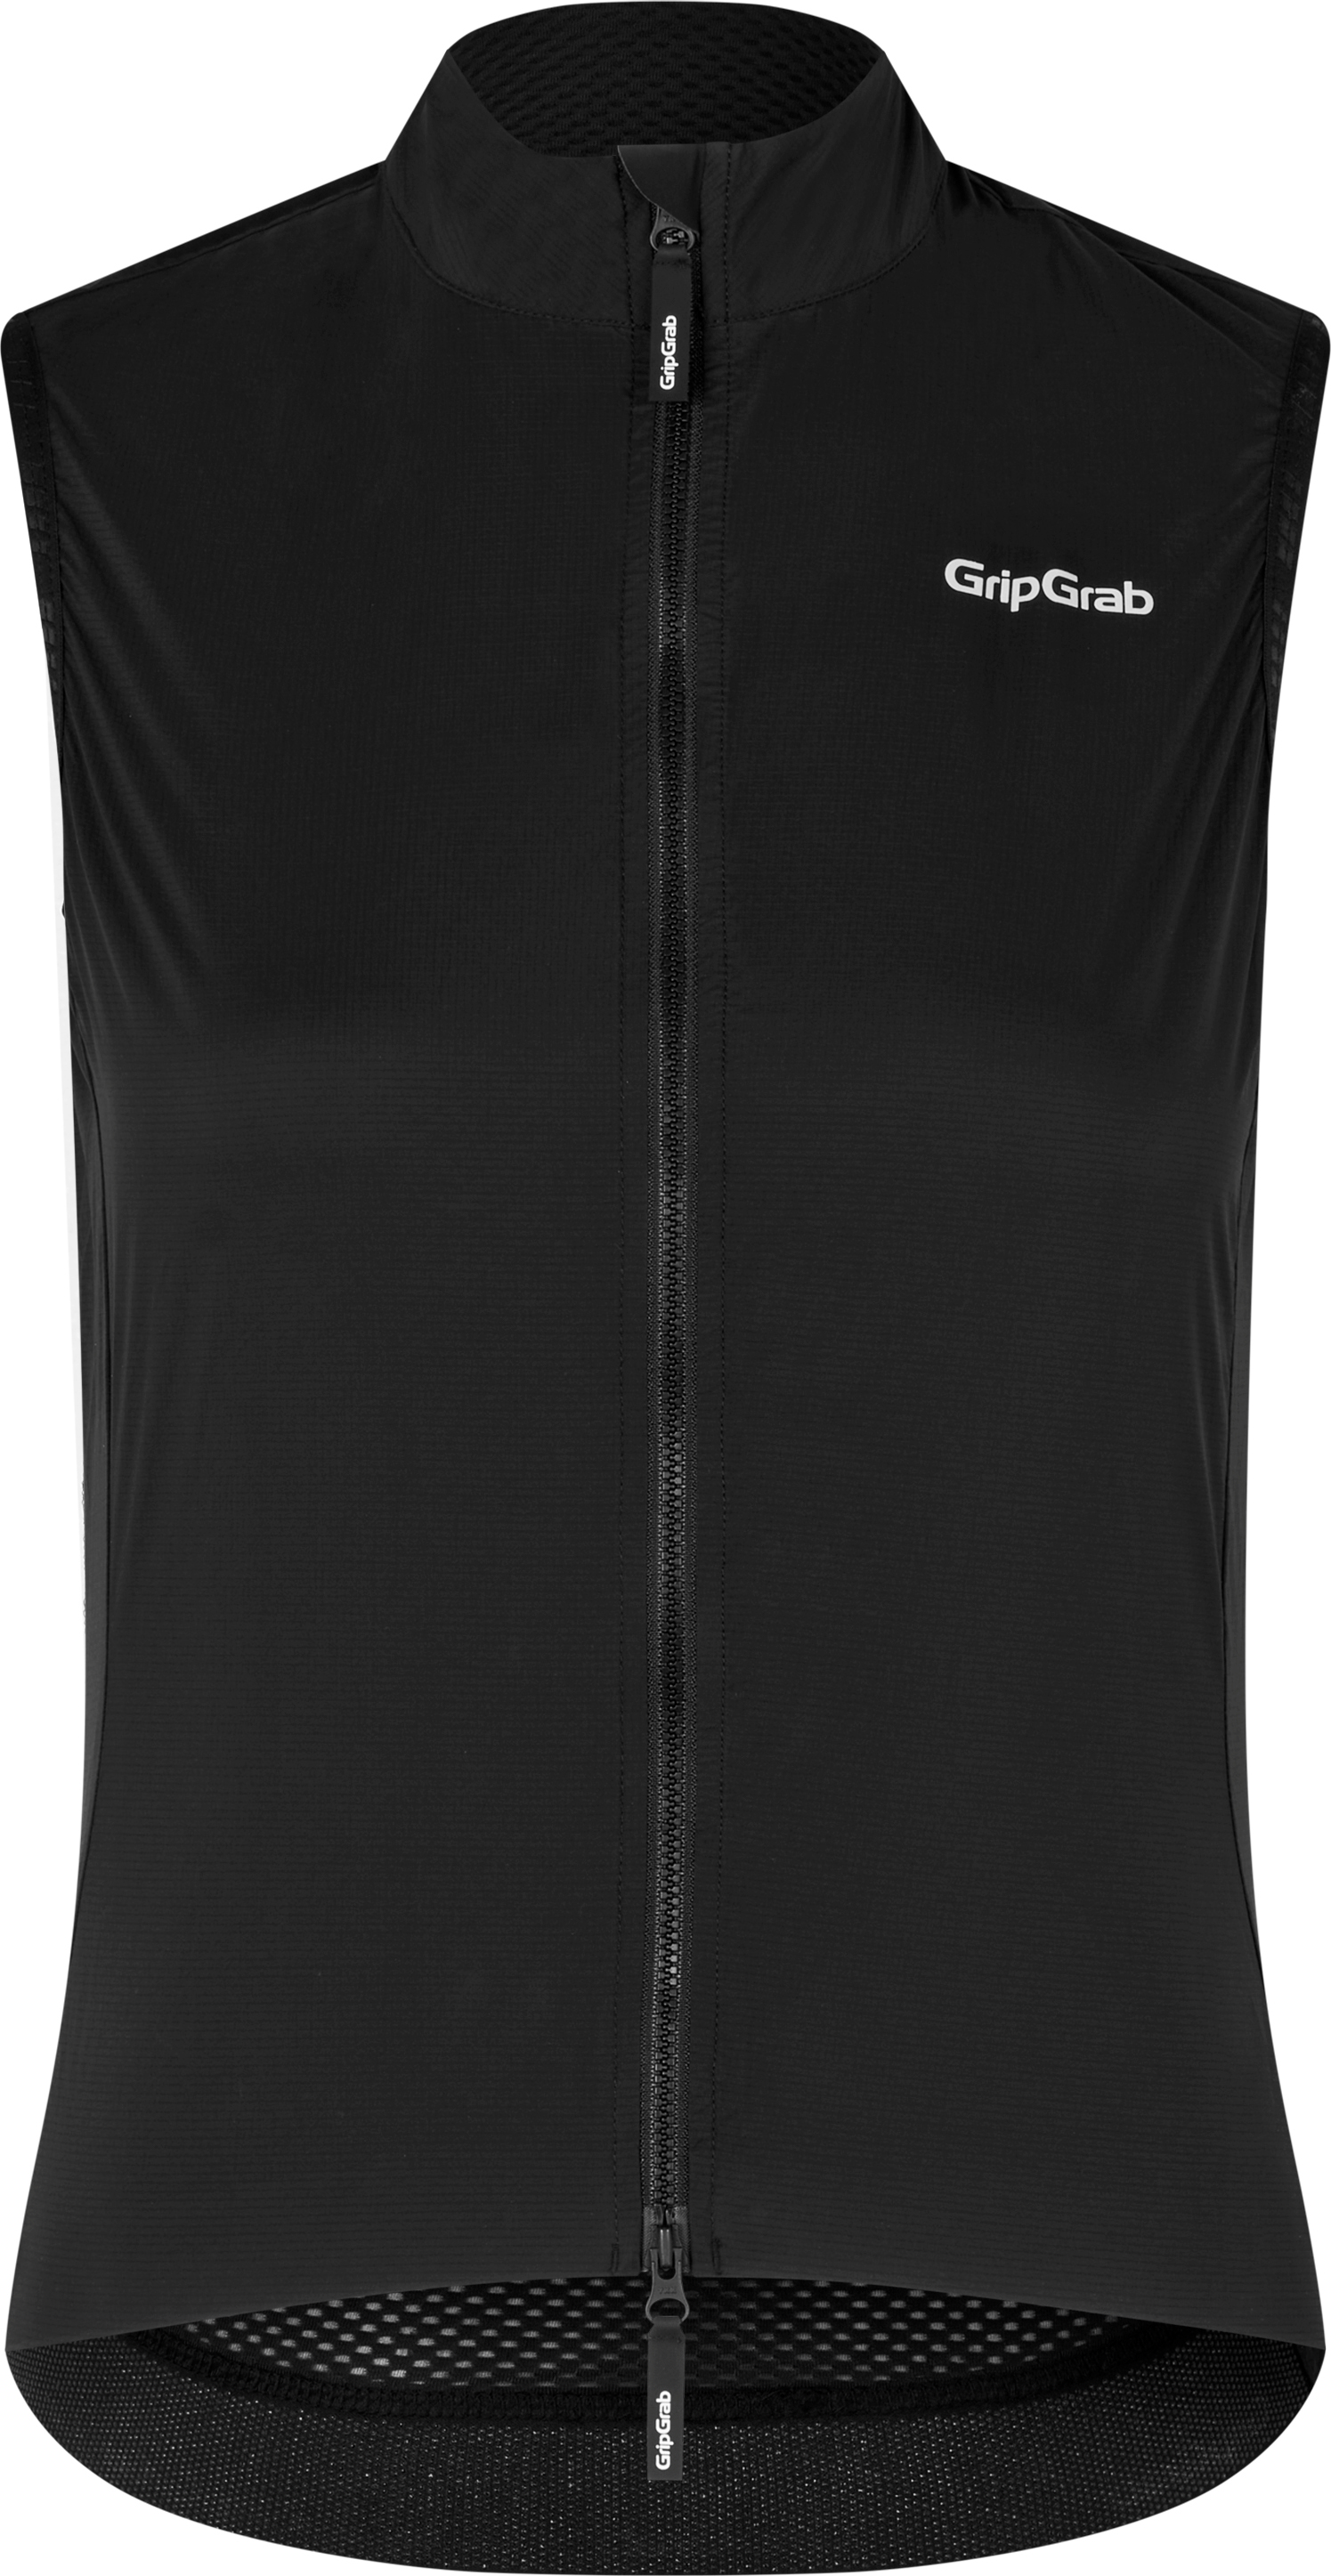 Gripgrab Women's WindBuster Windproof Lightweight Vest Black L, Black